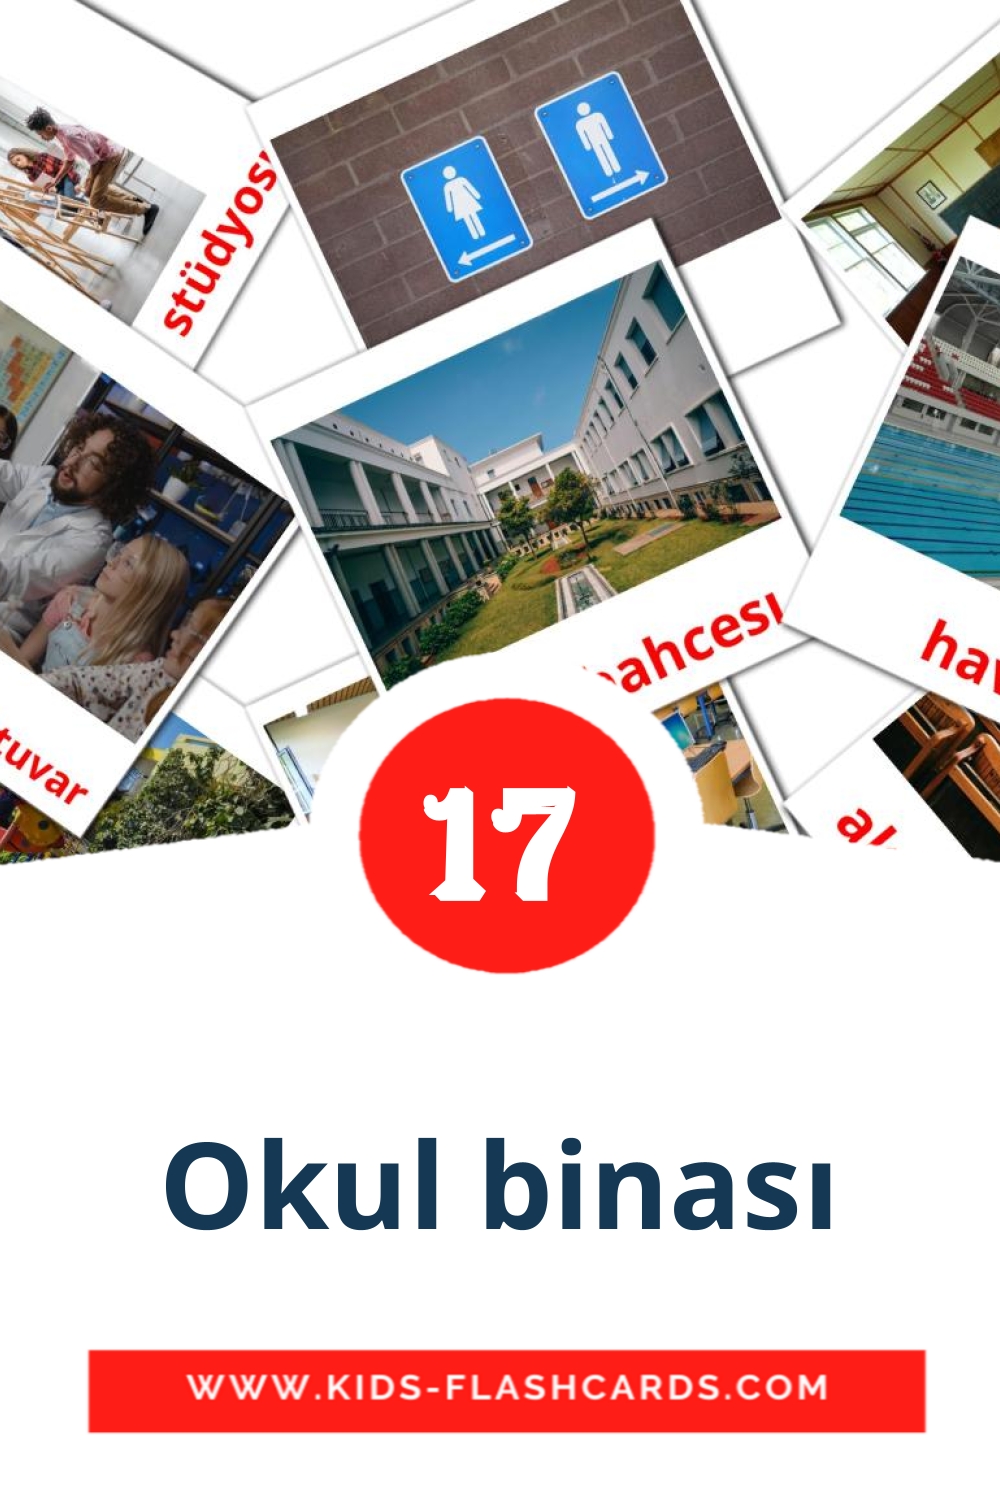 17 carte illustrate di Okul binası per la scuola materna in turco